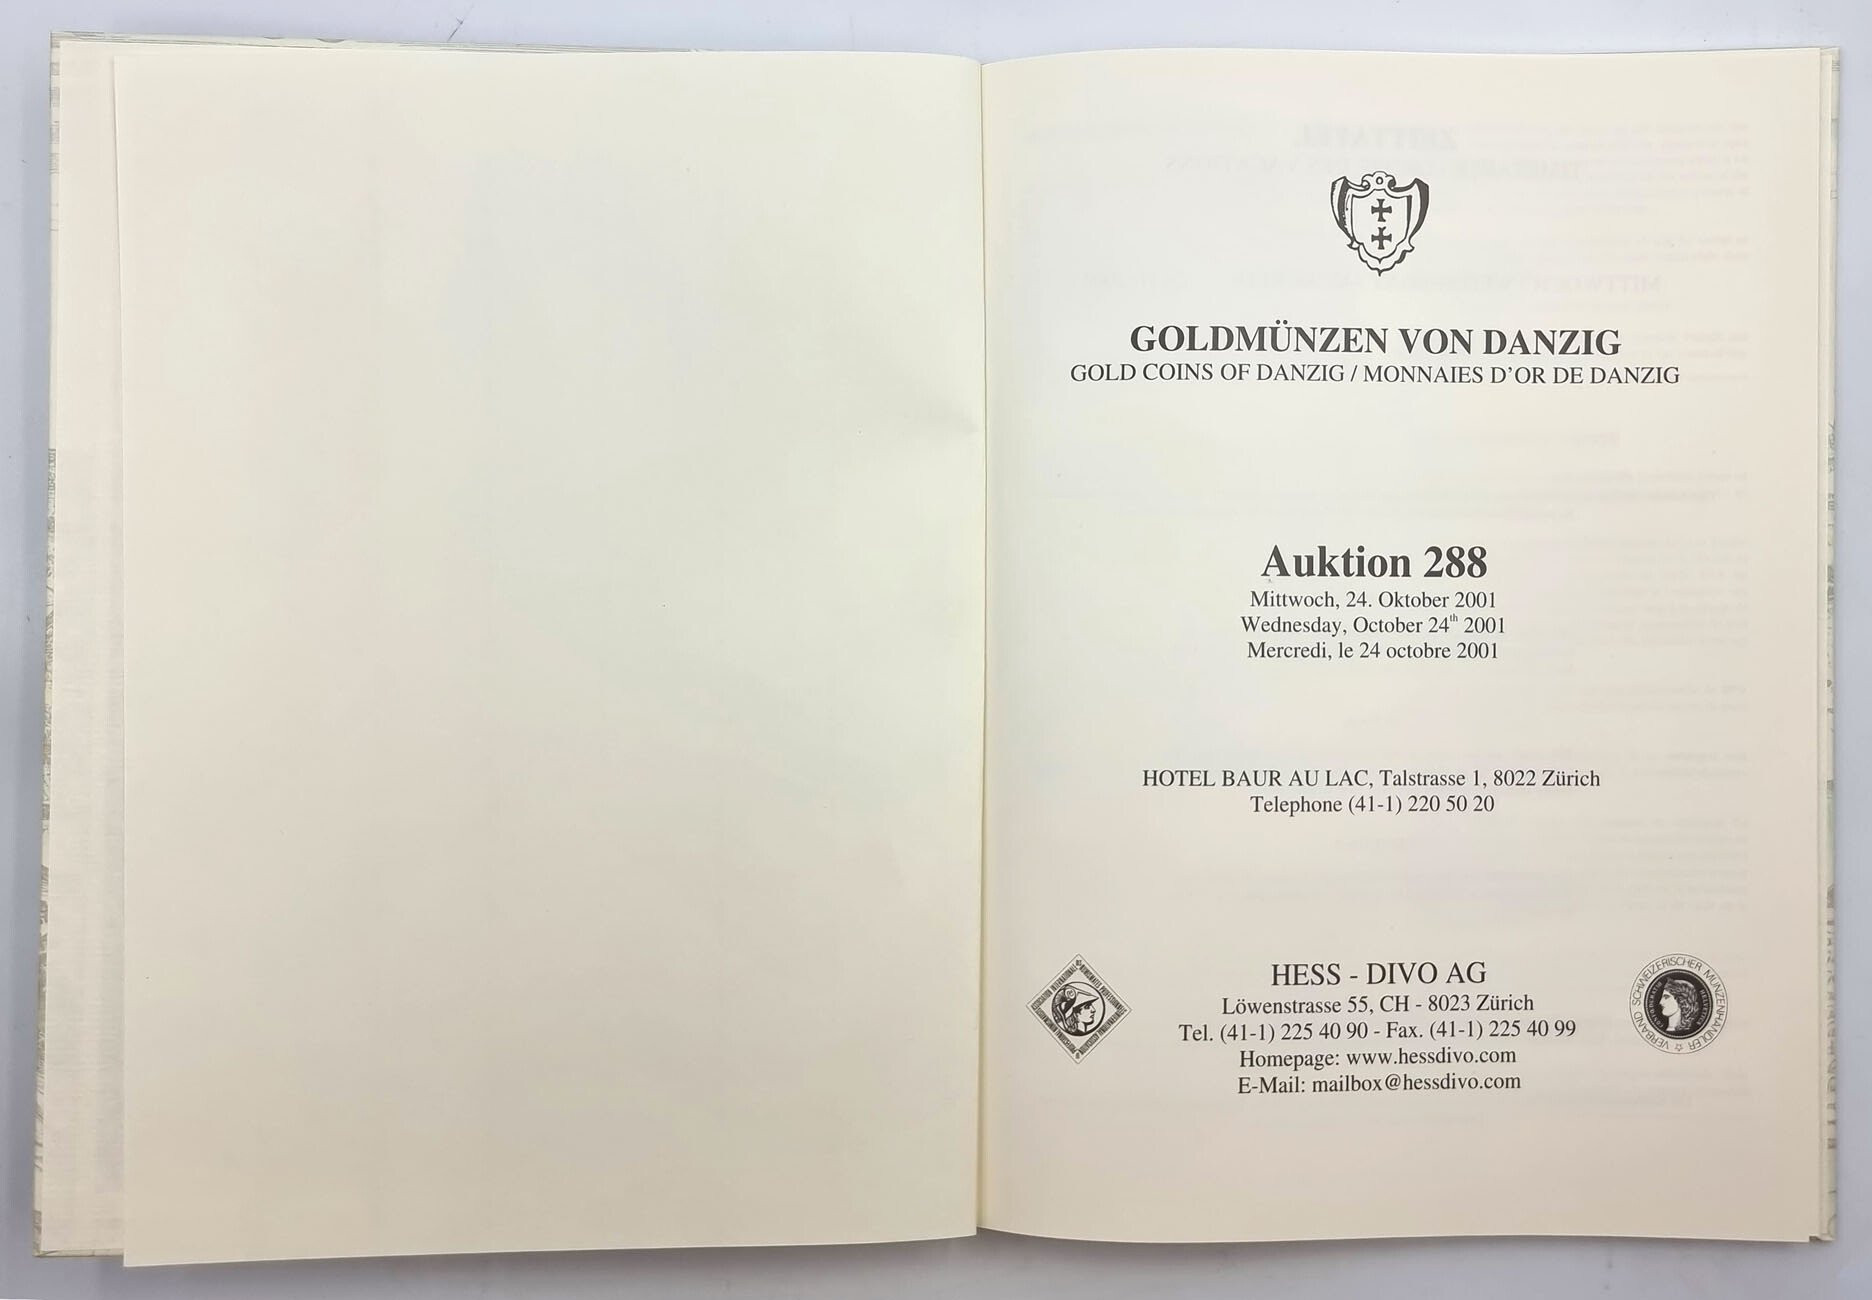 Katalog Aukcyjny. Złote monety z Gdańska - Hess-Divo AG, aukcja 288 - 2001 rok